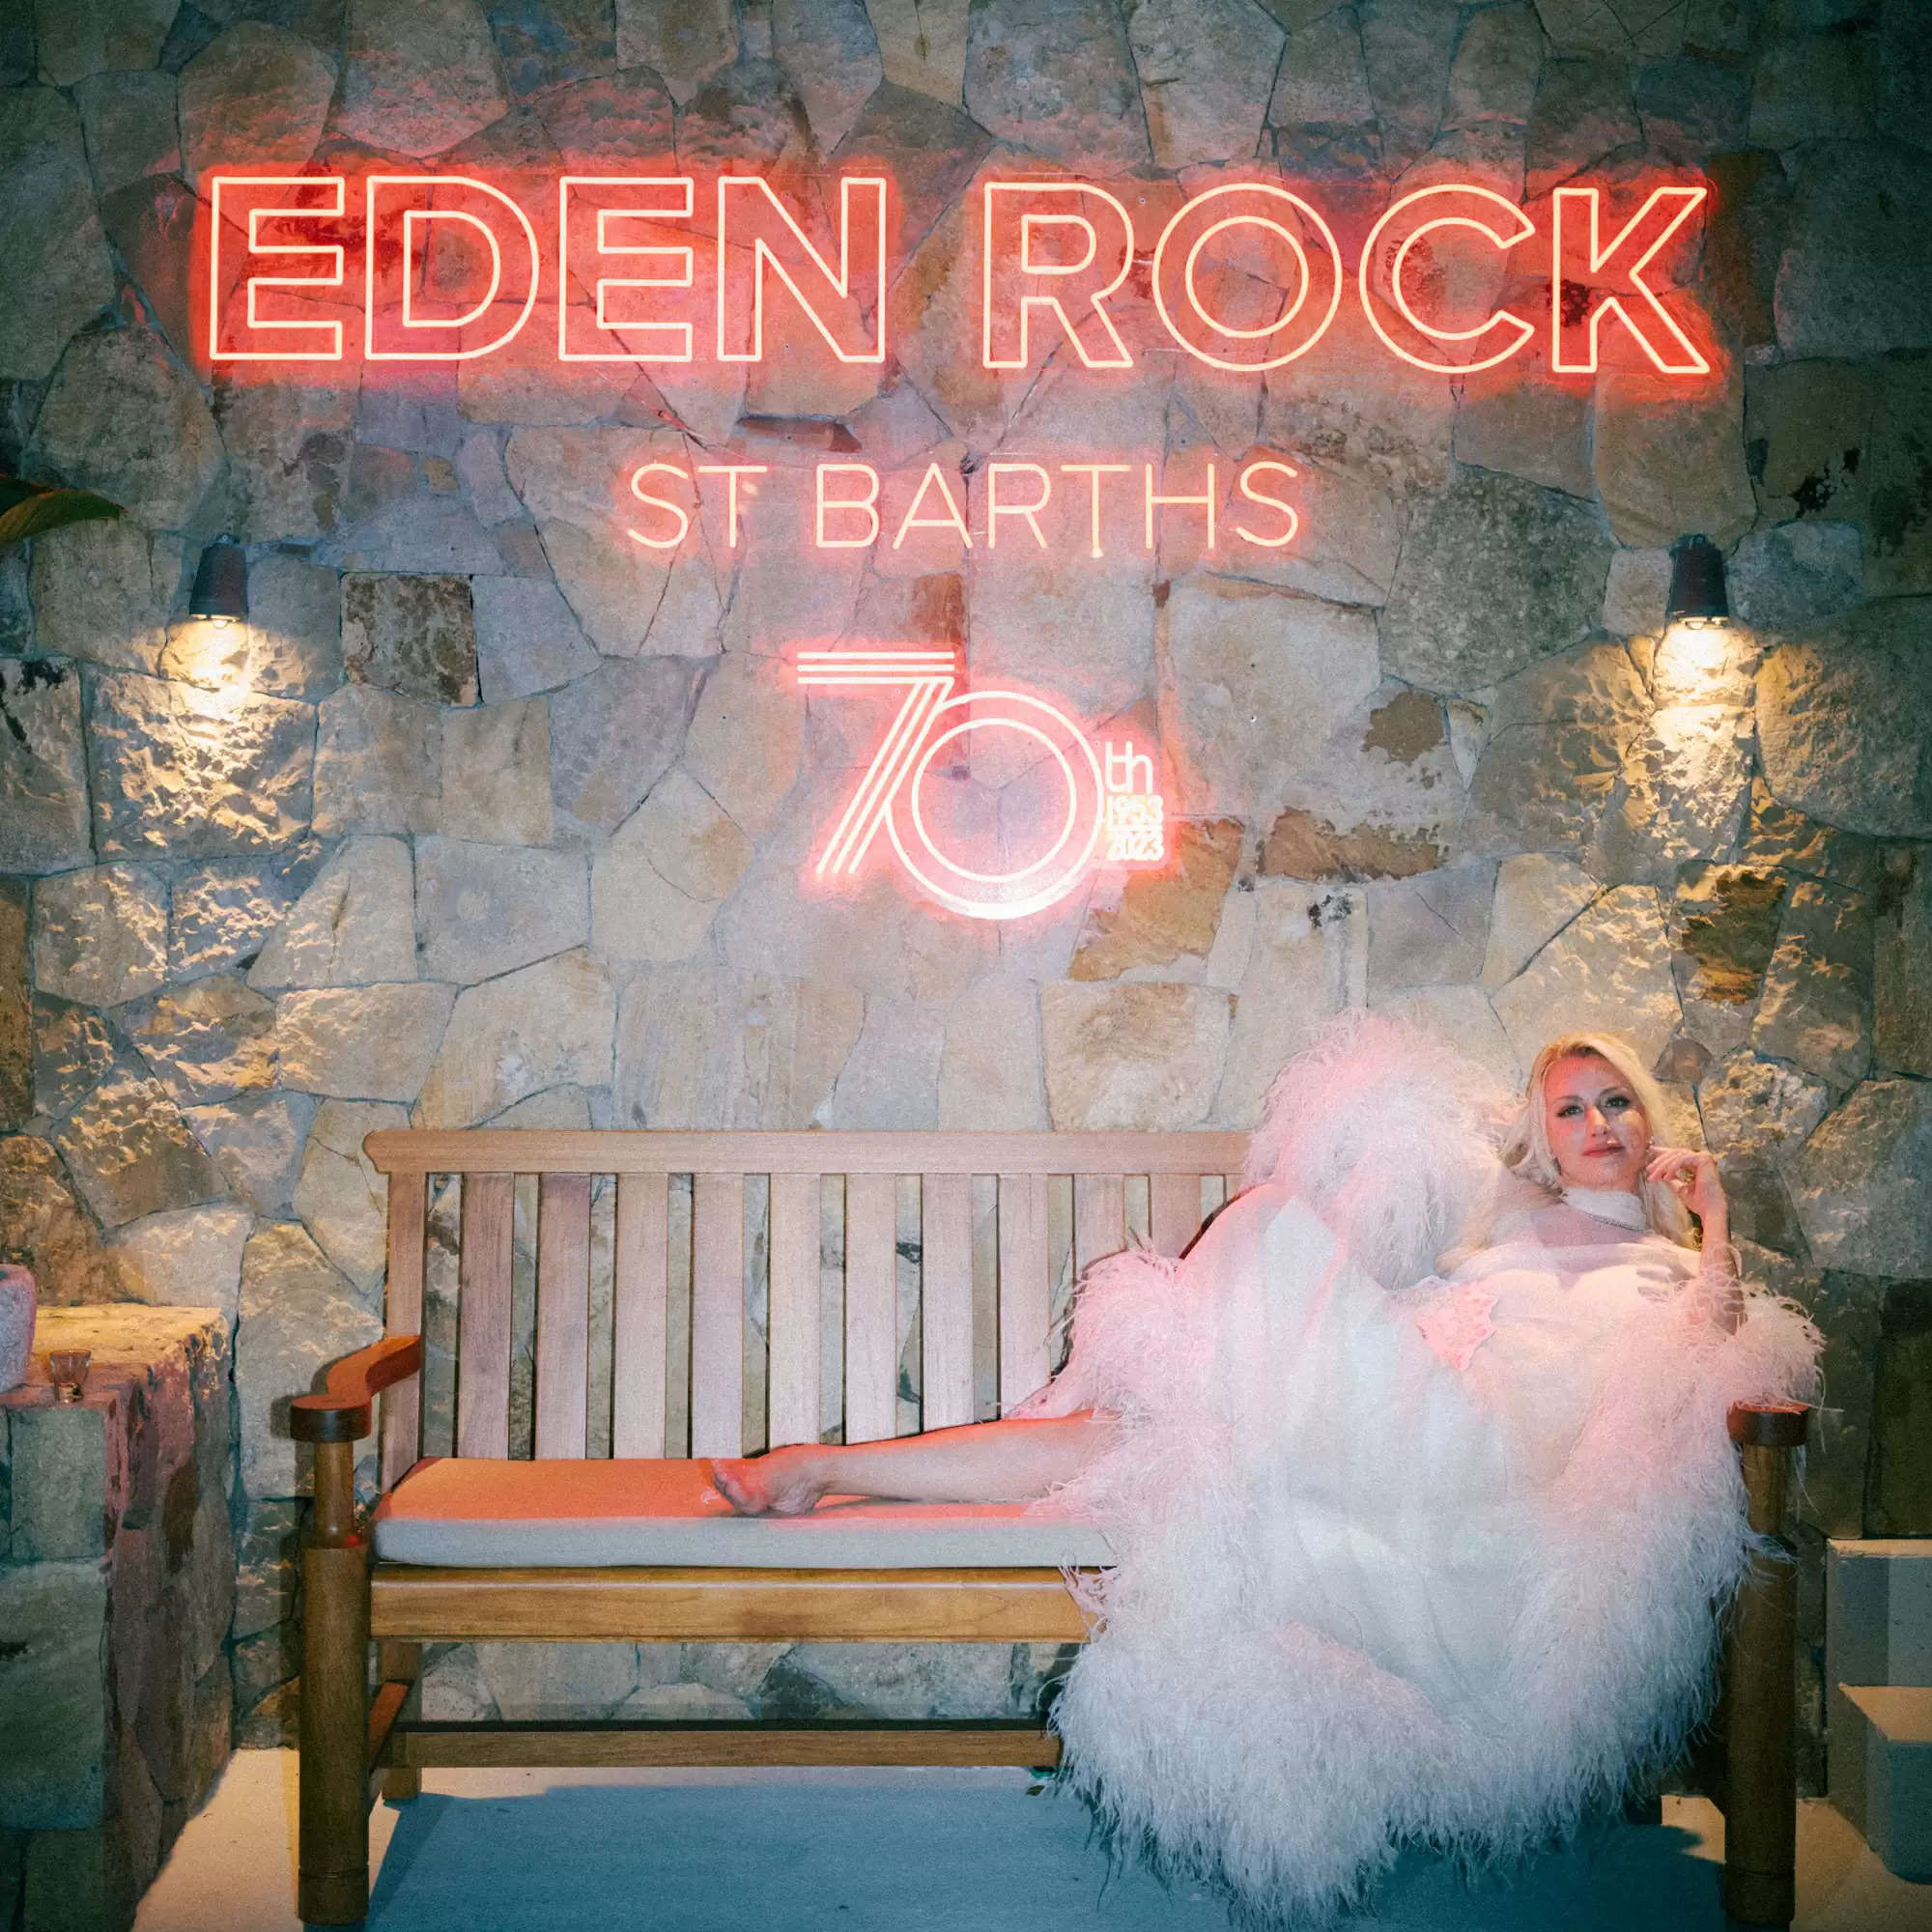 St Barths Wedding ceremony Photographer - An Iconic Eden Rock Wedding ceremony